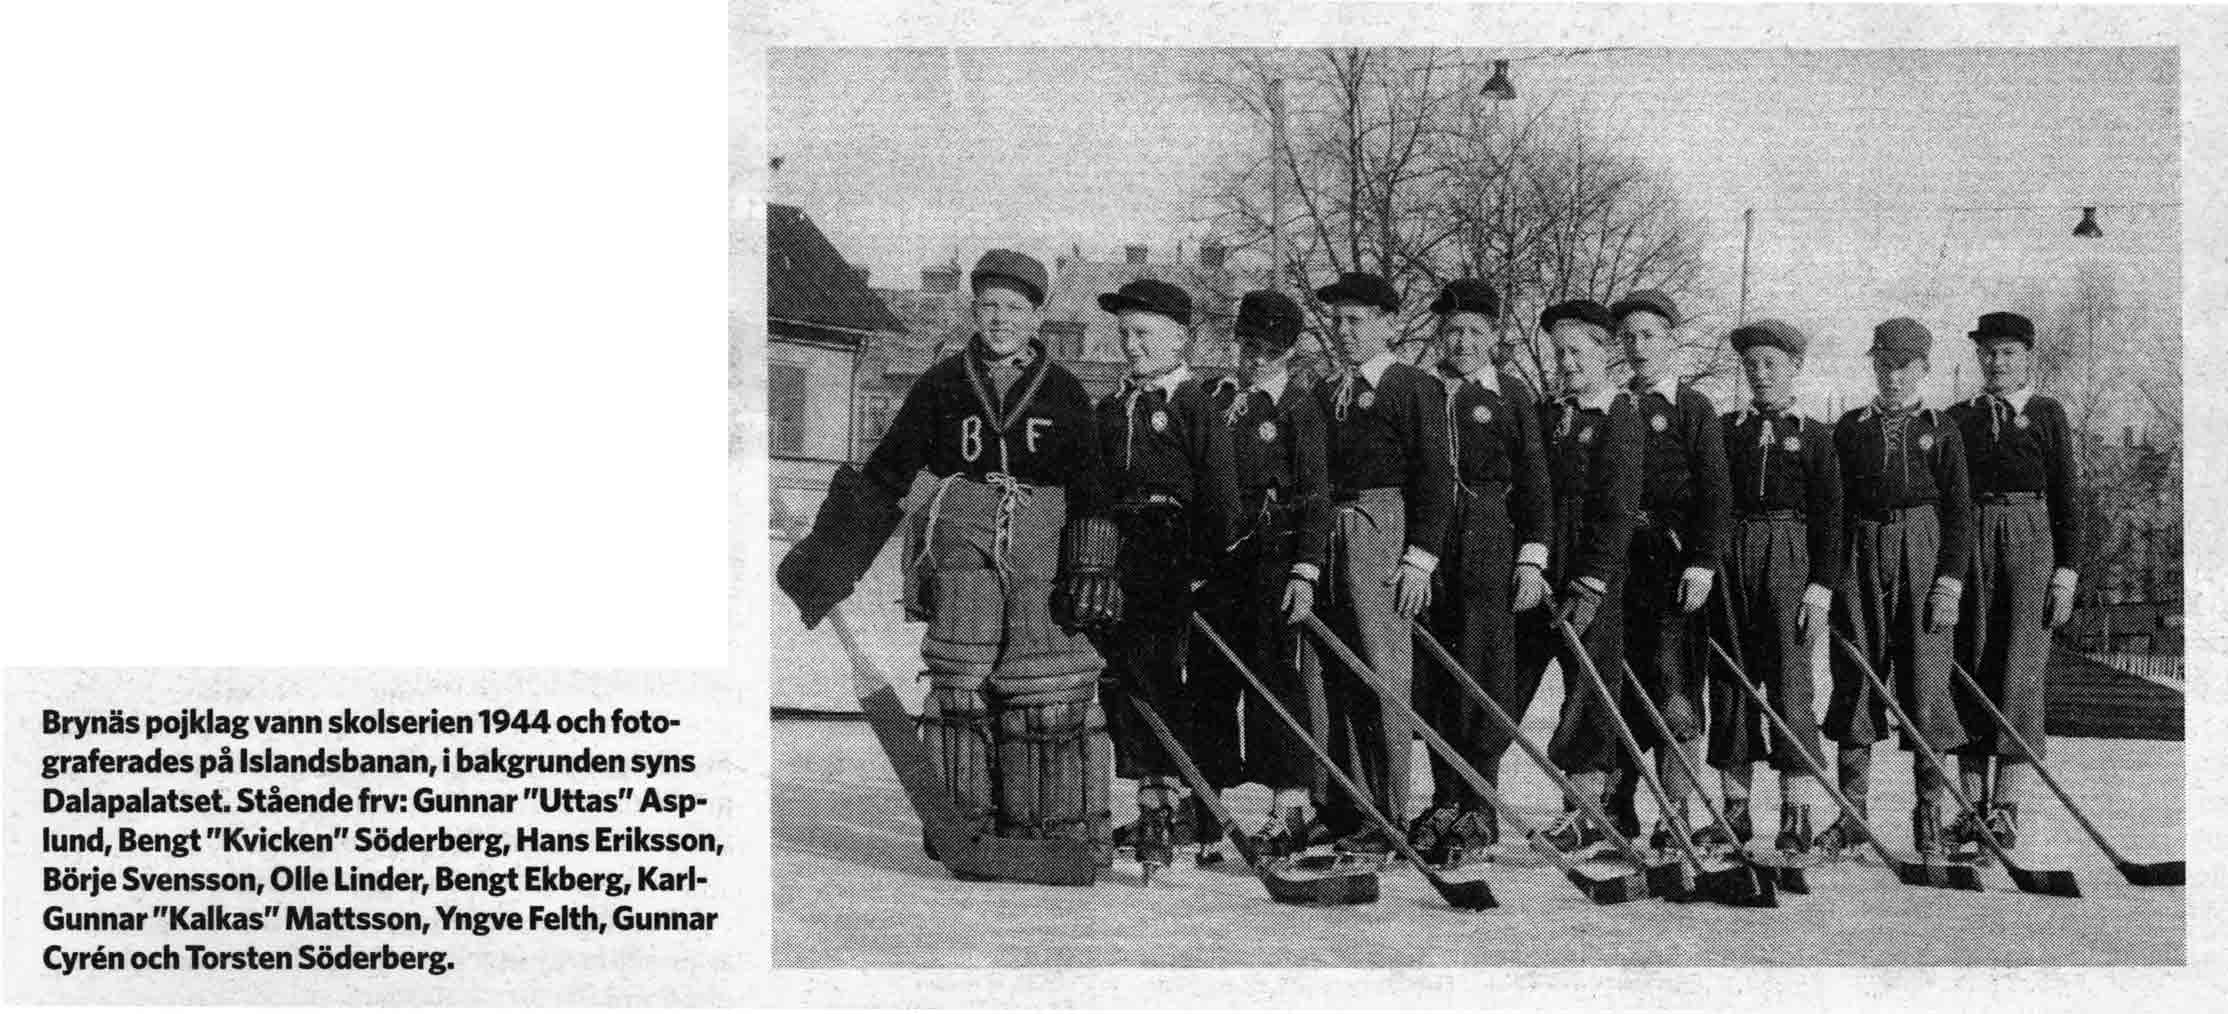 Brynäs, skolseriemästare 1944